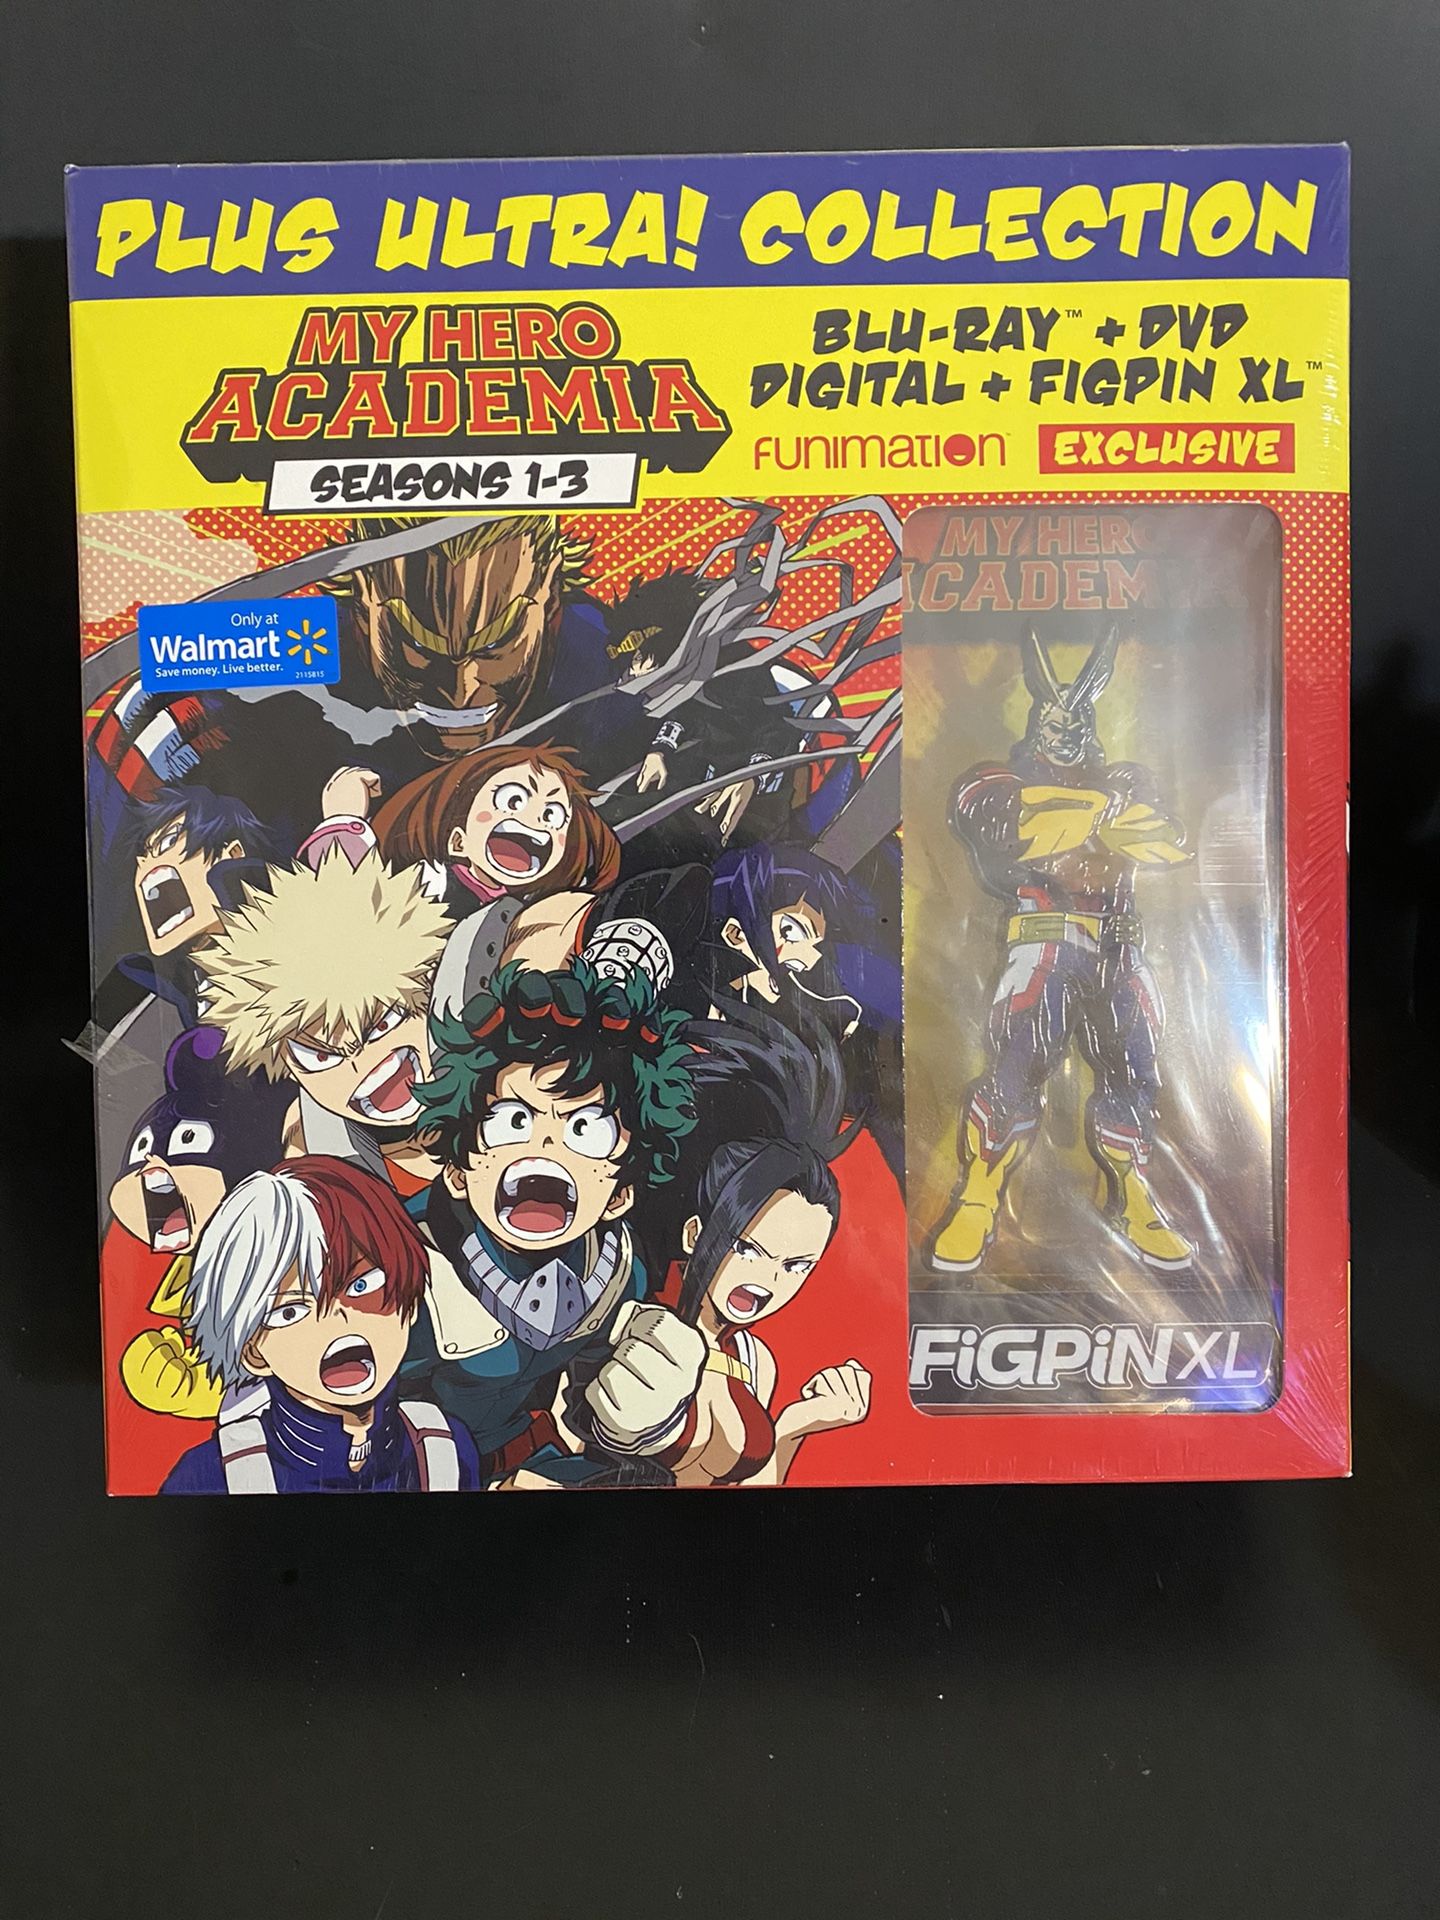 My Hero Academia Plus Ultra Collection Blu-ray DVD Digital FiGPiN Walmart Exclusive